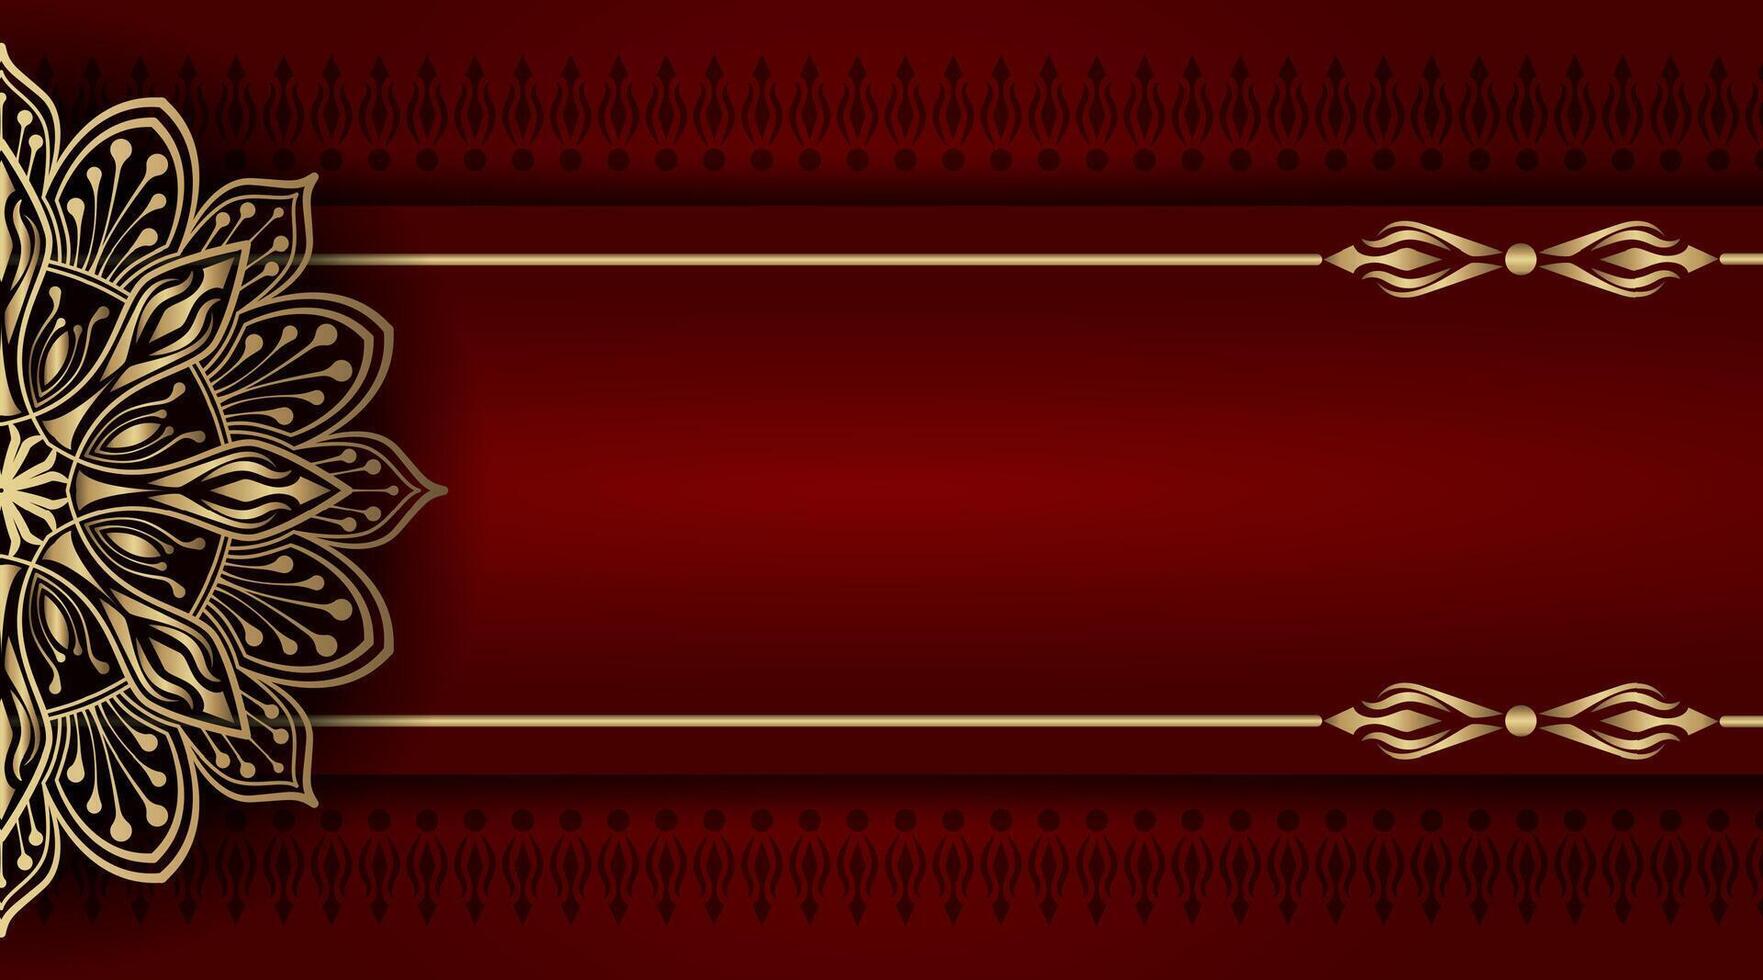 lujo rojo antecedentes con dorado mandala ornamento vector